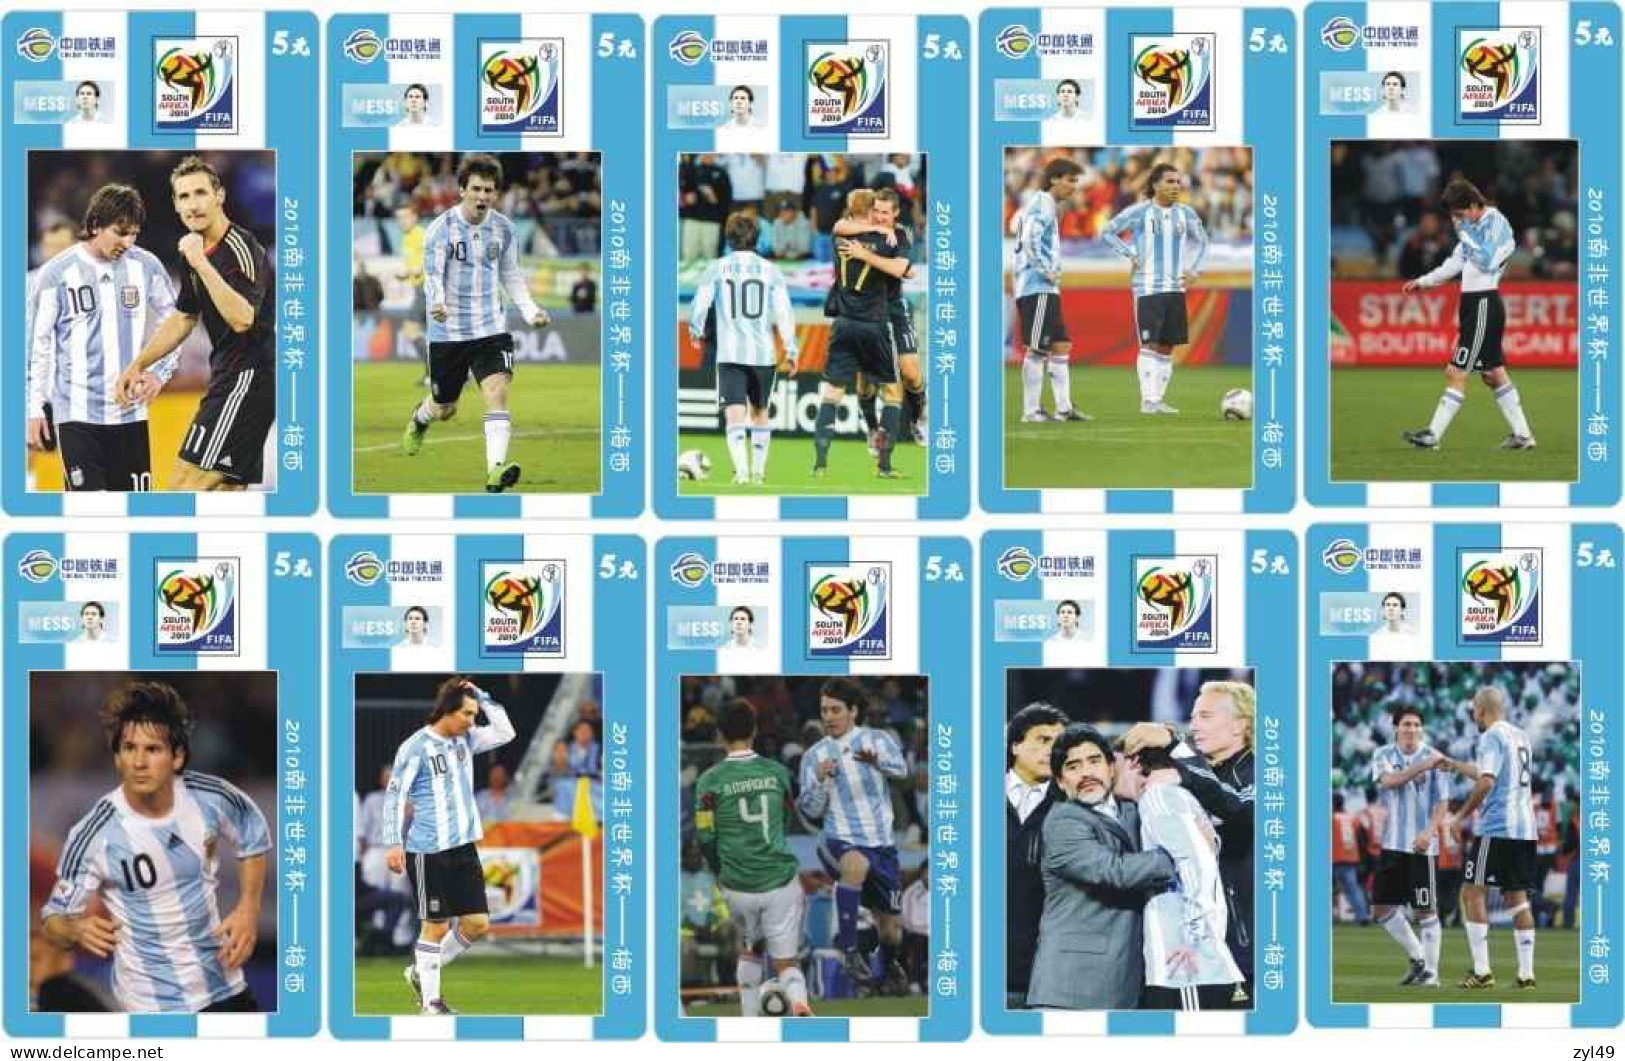 F13003 China phone cards football FIFA World Cup 2010 Messi 85pcs